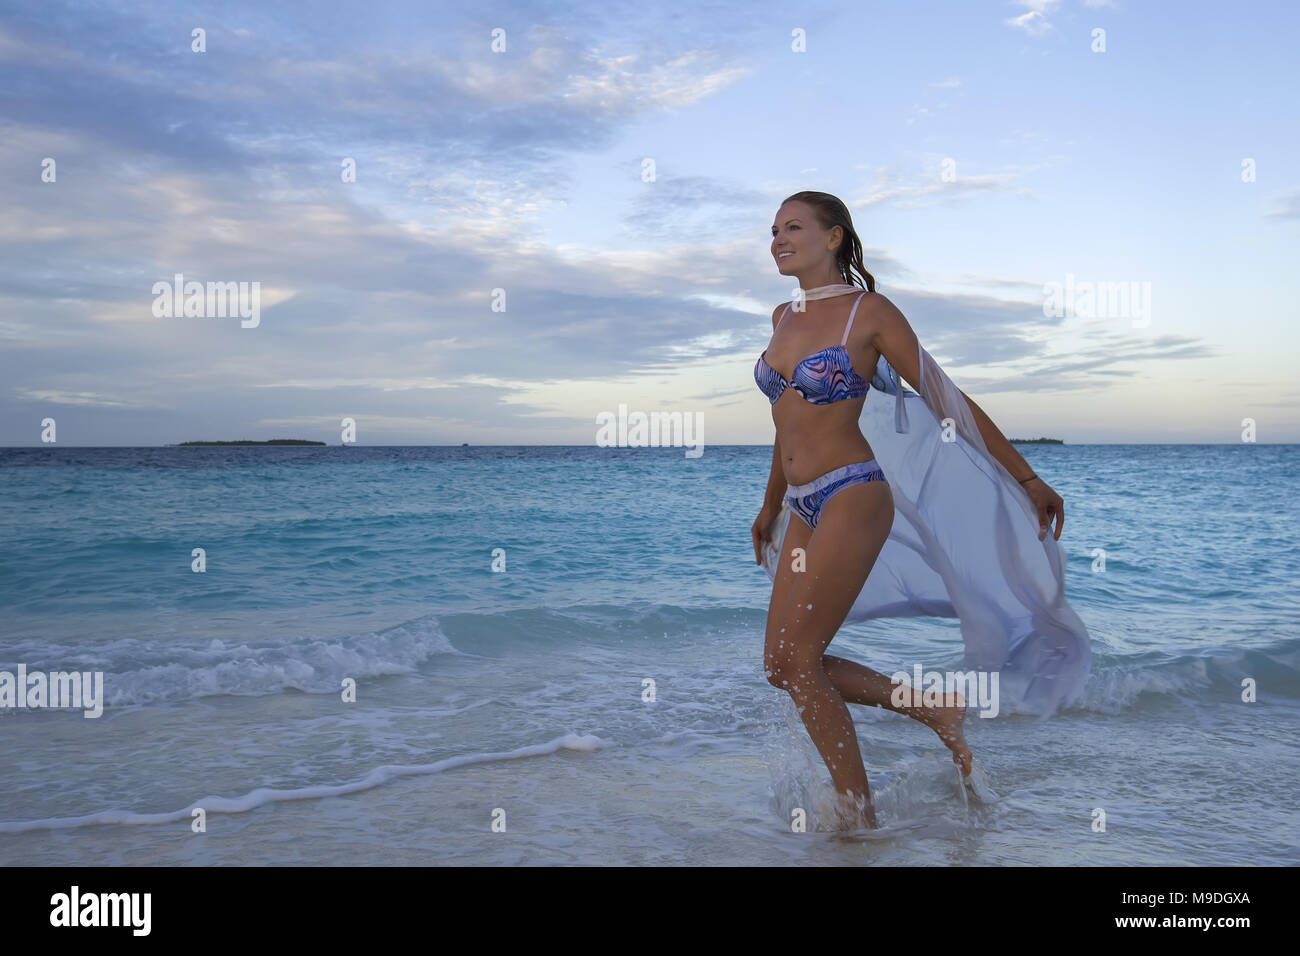 Young woman in bikini runs on water at sunset Stock Photo